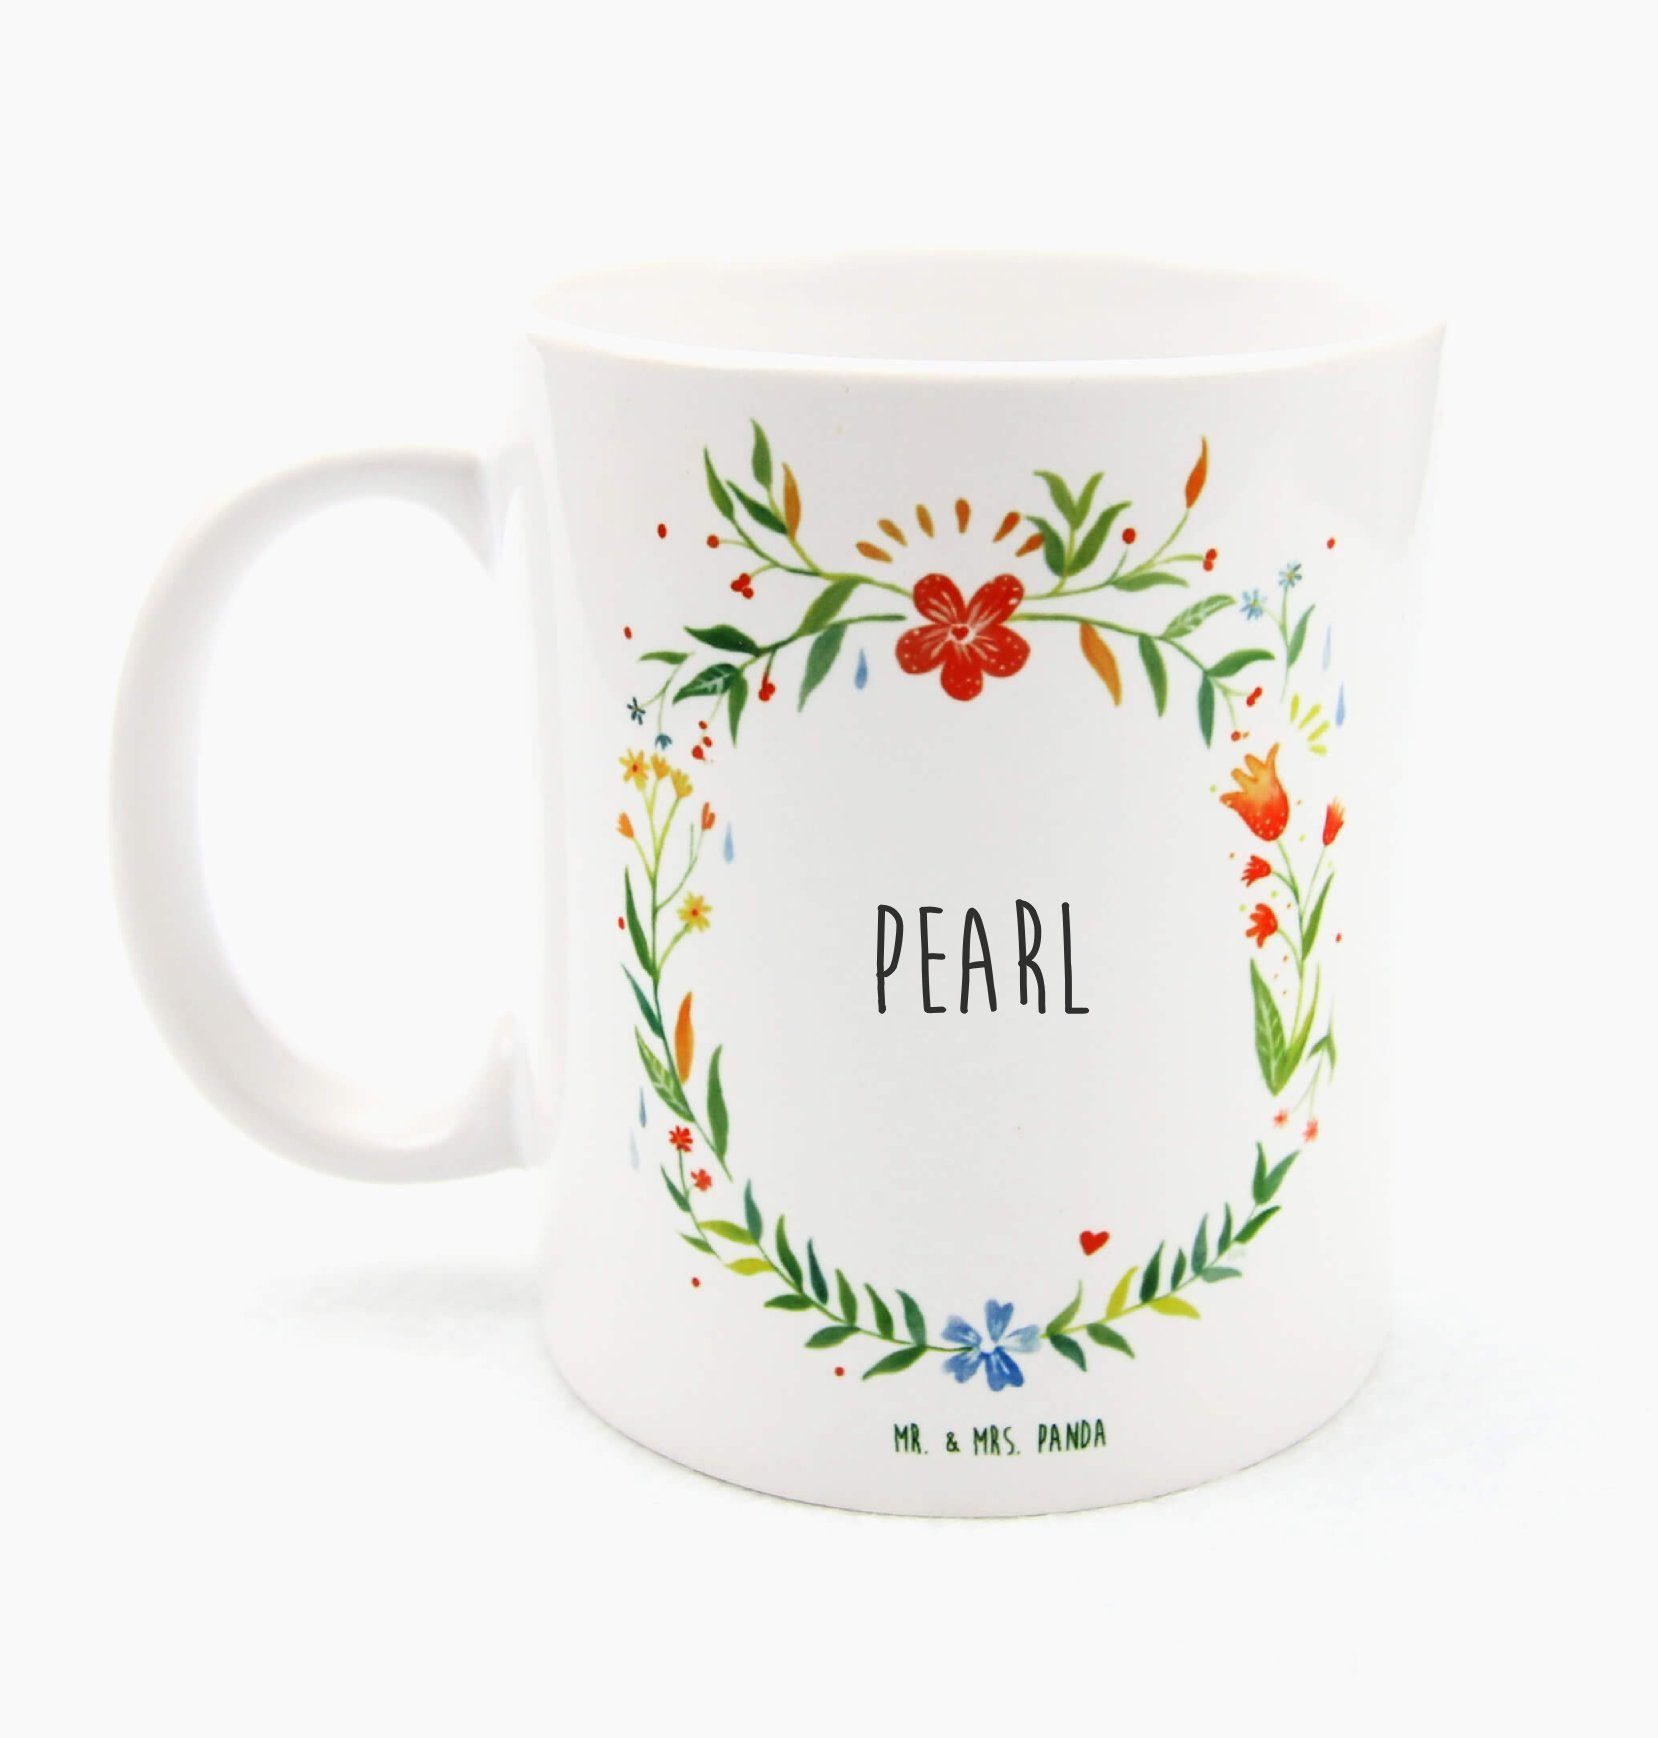 Mr. & Mrs. Panda Tasse Pearl - Geschenk, Tasse, Kaffeetasse, Becher, Tasse Motive, Teetasse, Keramik | Tassen